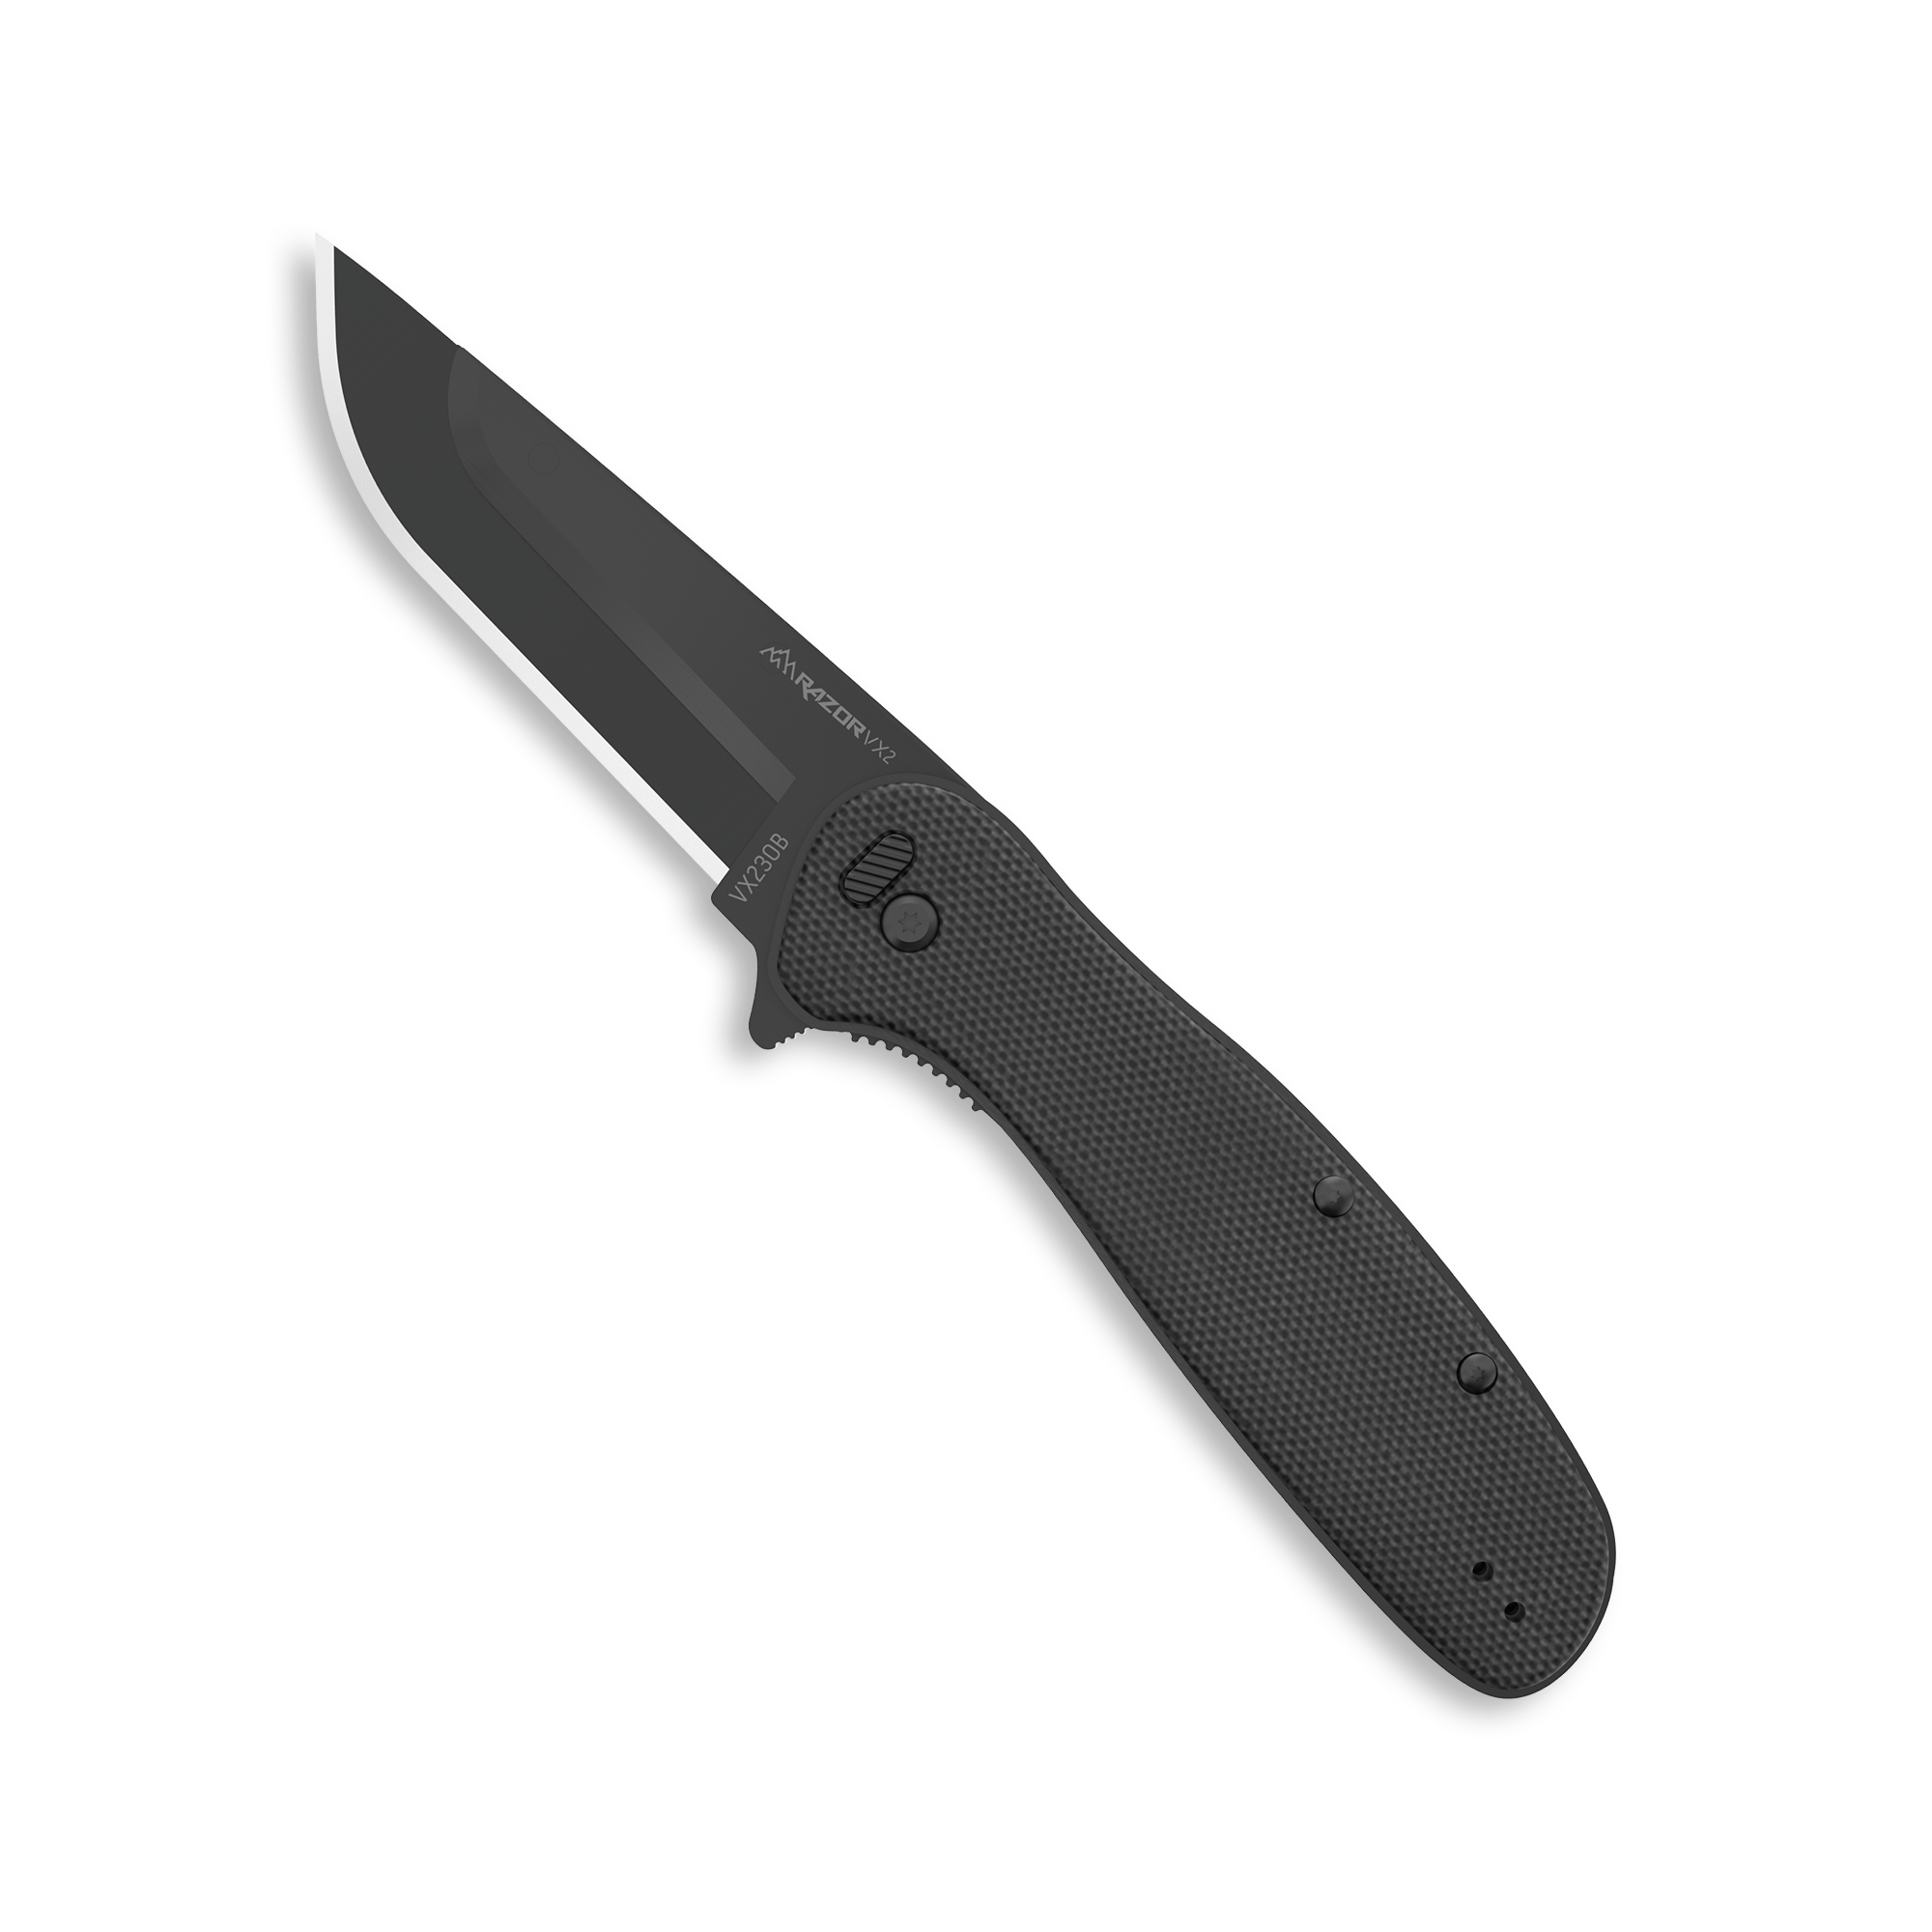 Wear resistant Double-sided Knife Sharpener For Kitchen/Spring